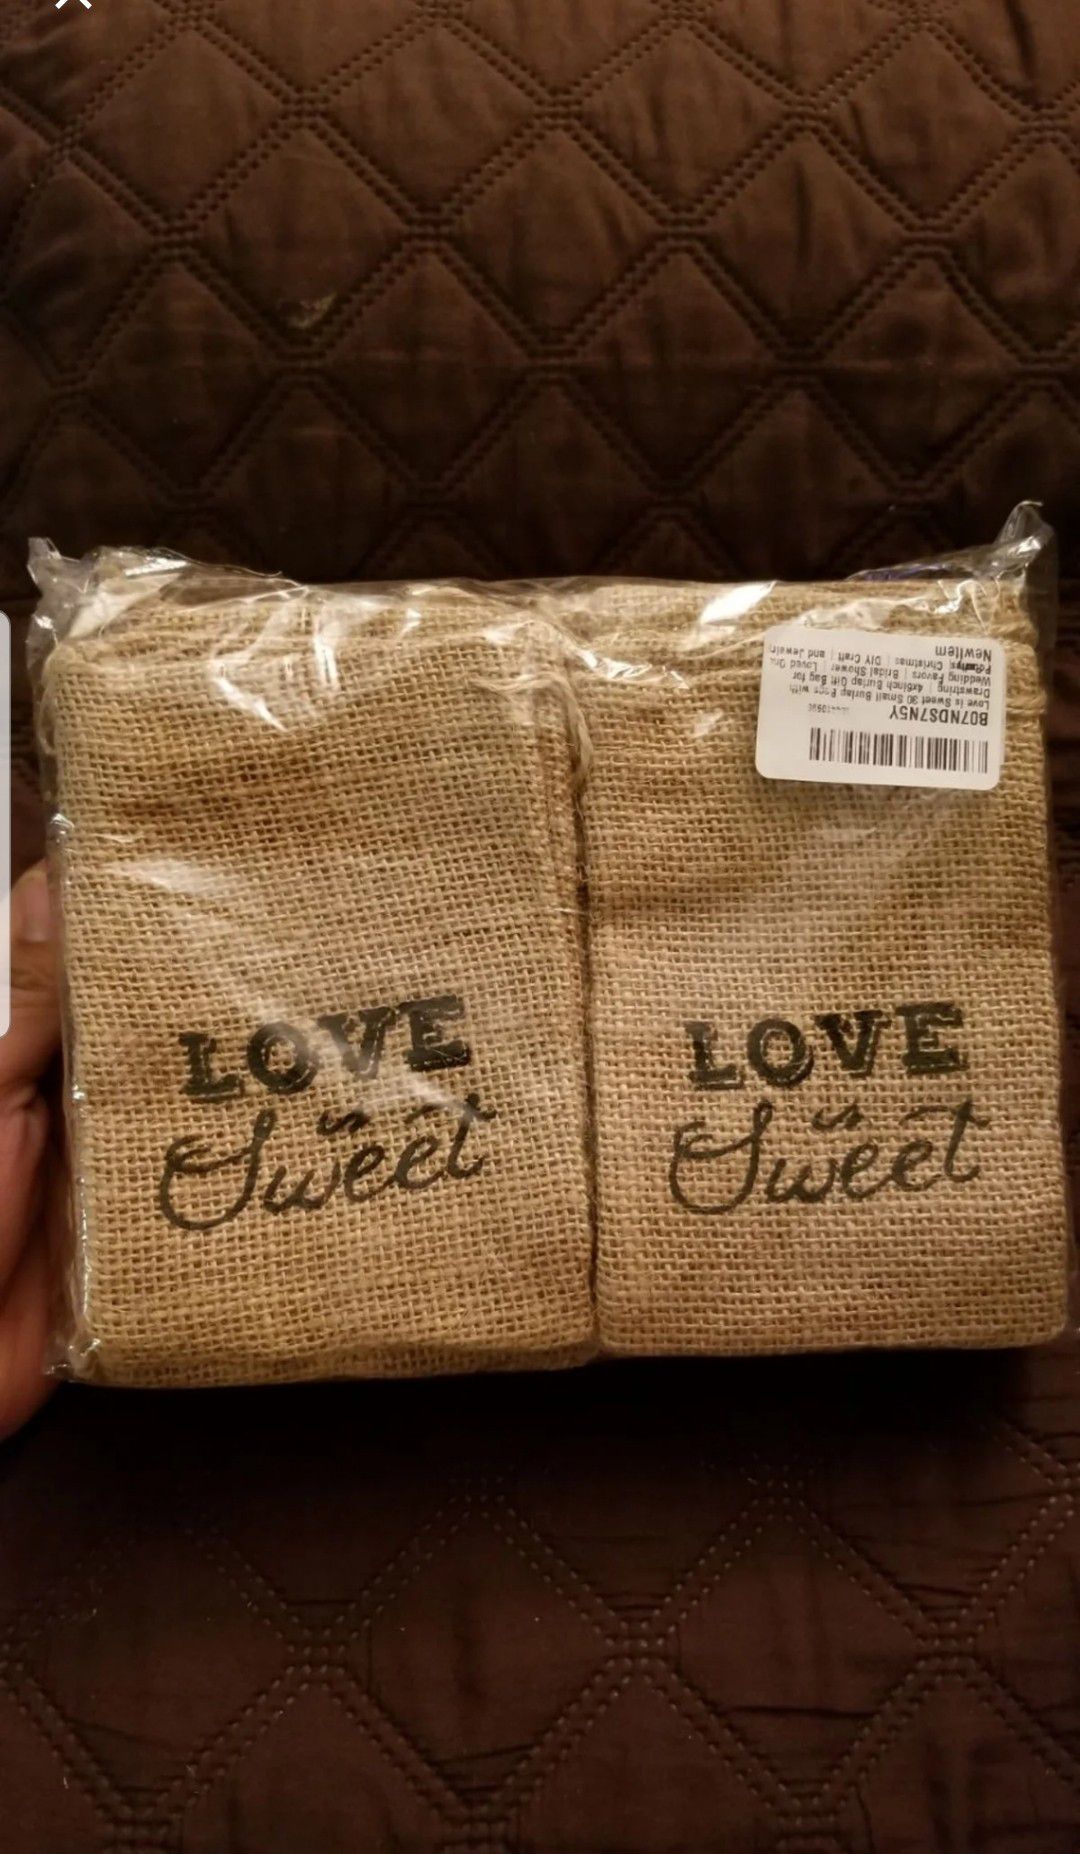 Love is Sweet 30 Small Burlap Bags